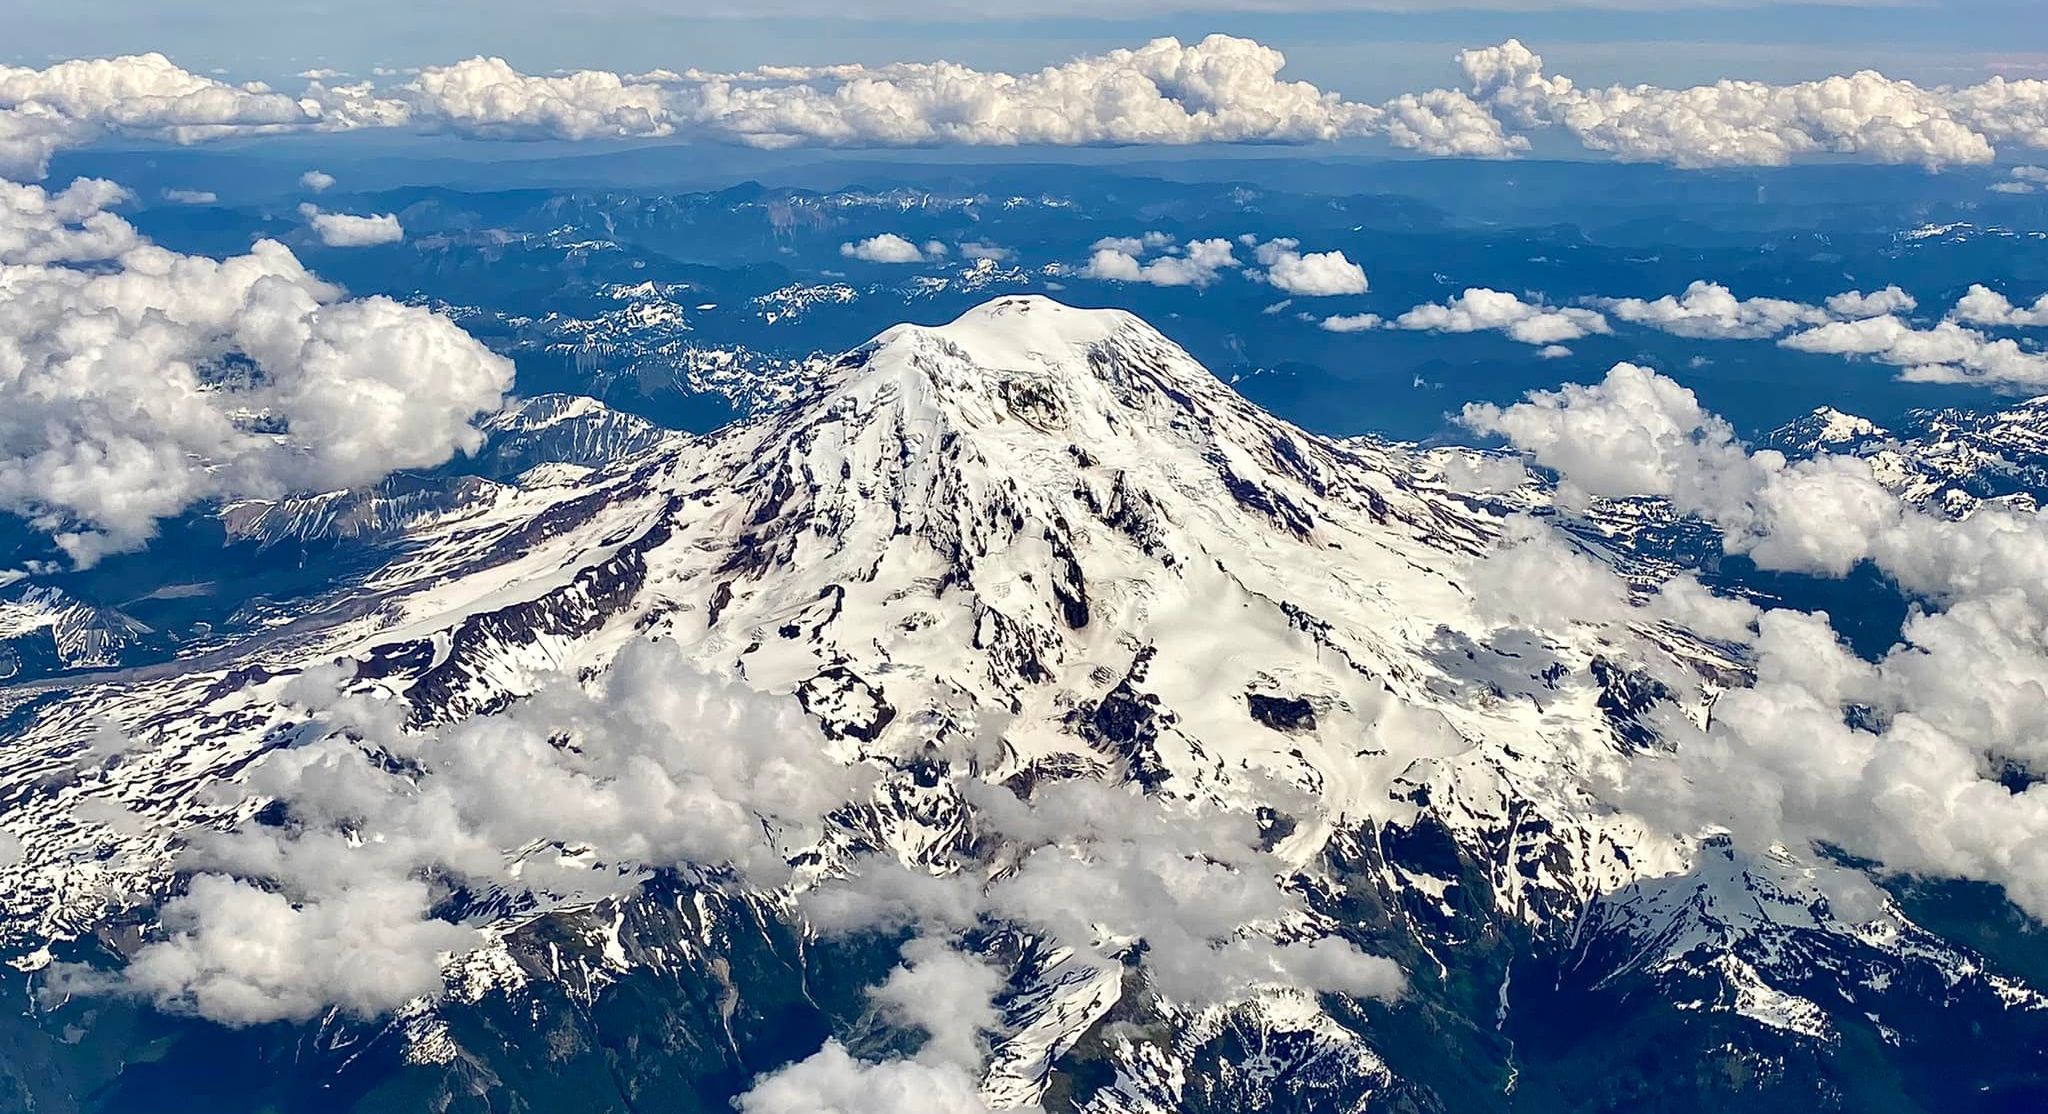 Aerial view of Mount Rainier ( 4392m ) Pacific Ranges, Washington State, USA from Colquhoun Peak